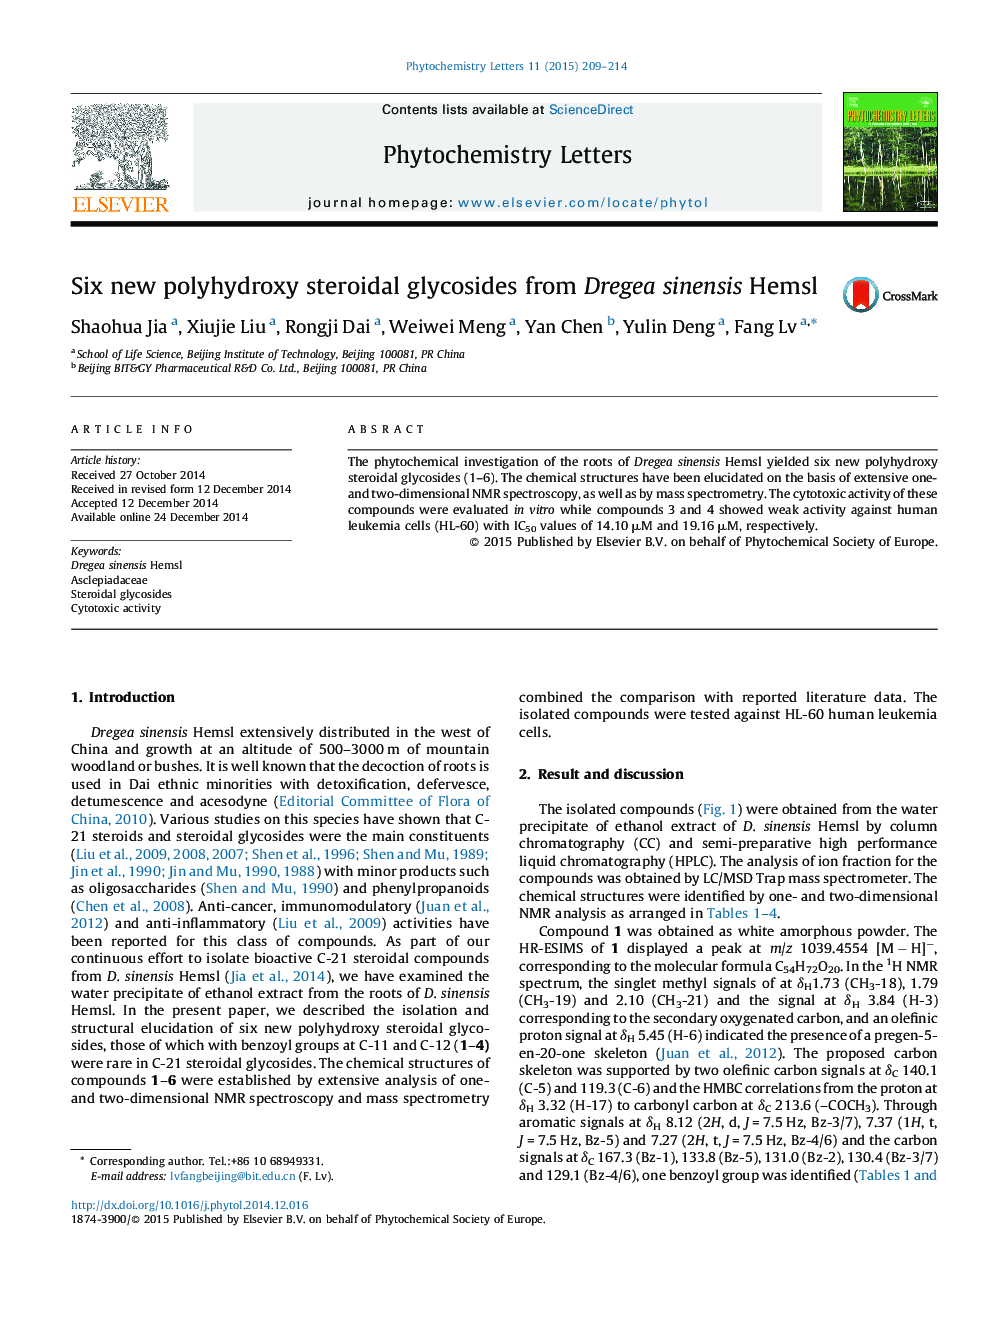 Six new polyhydroxy steroidal glycosides from Dregea sinensis Hemsl